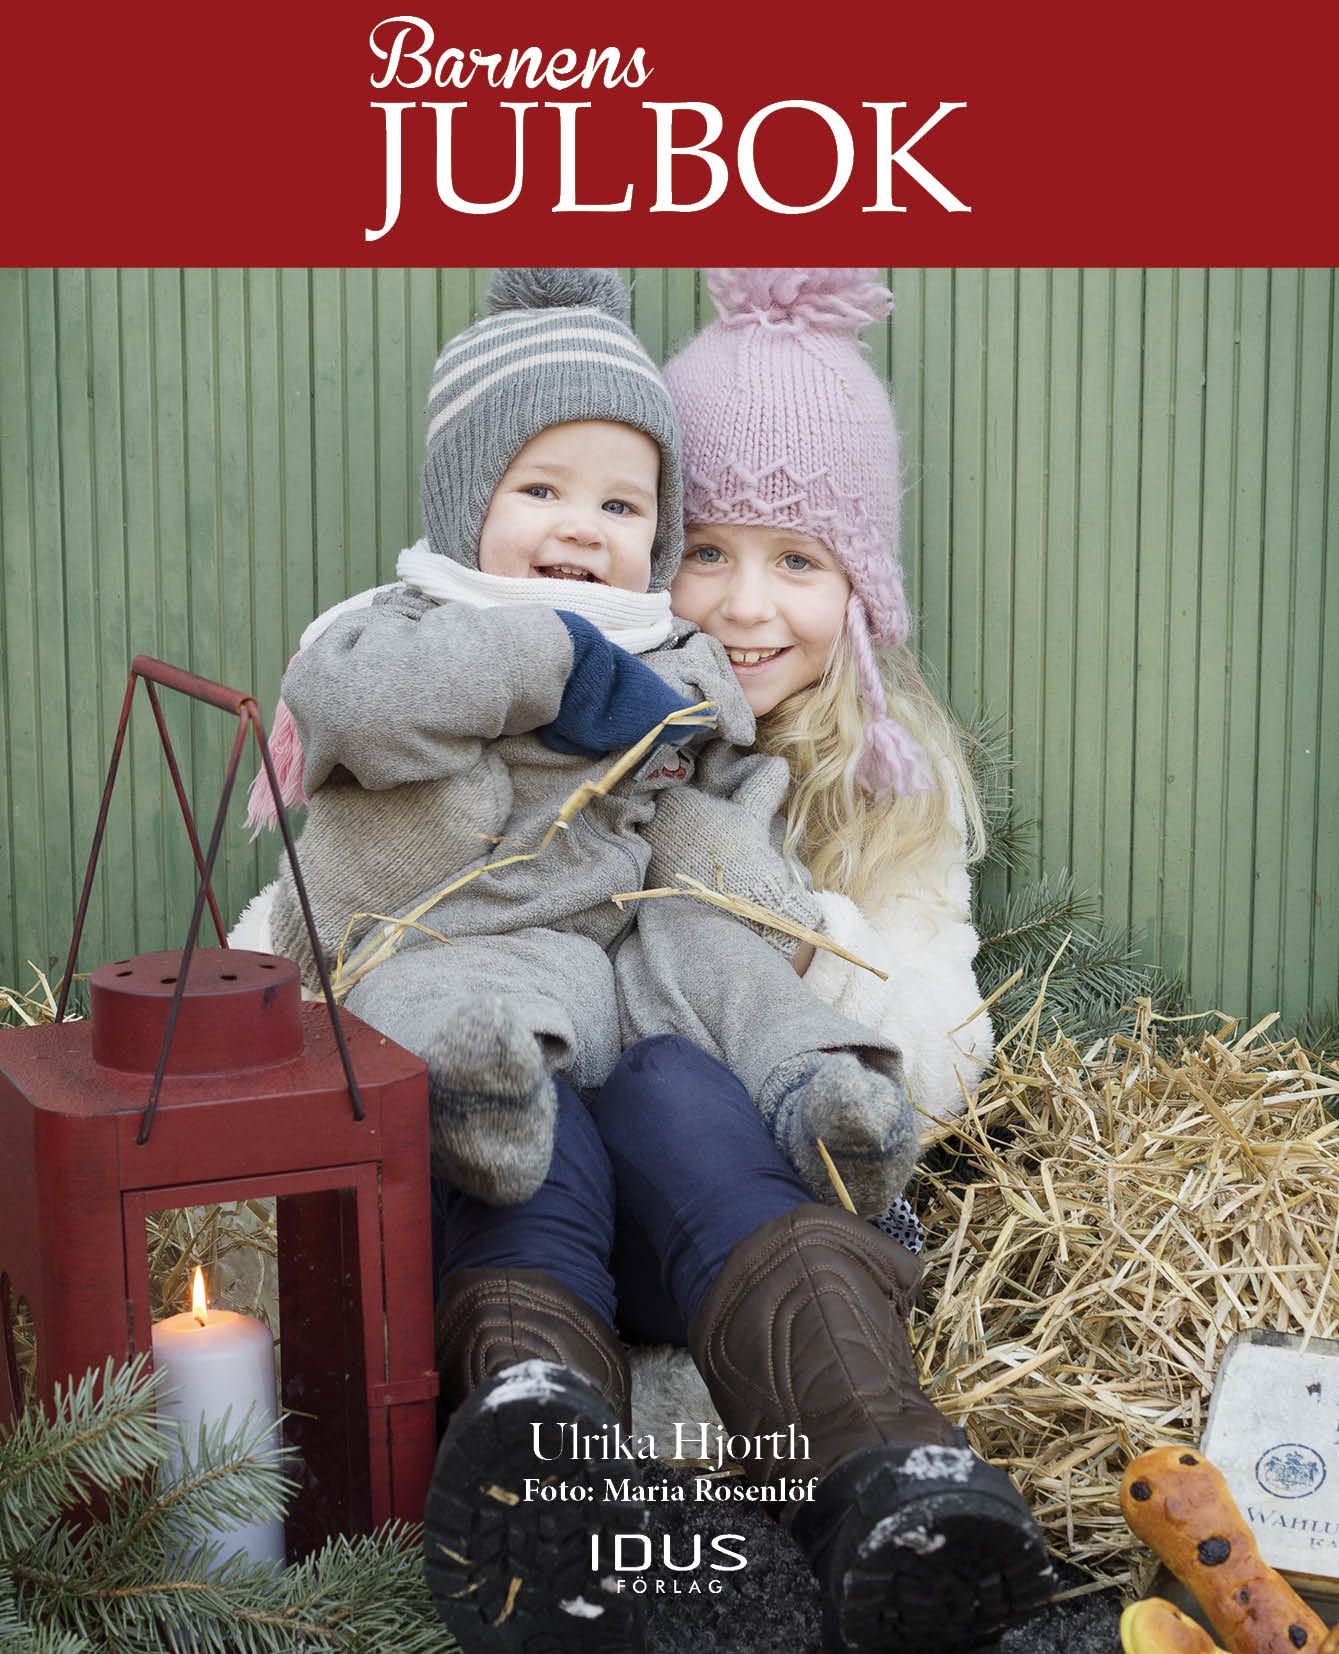 Barnens julbok, eBook by Ulrika Hjorth